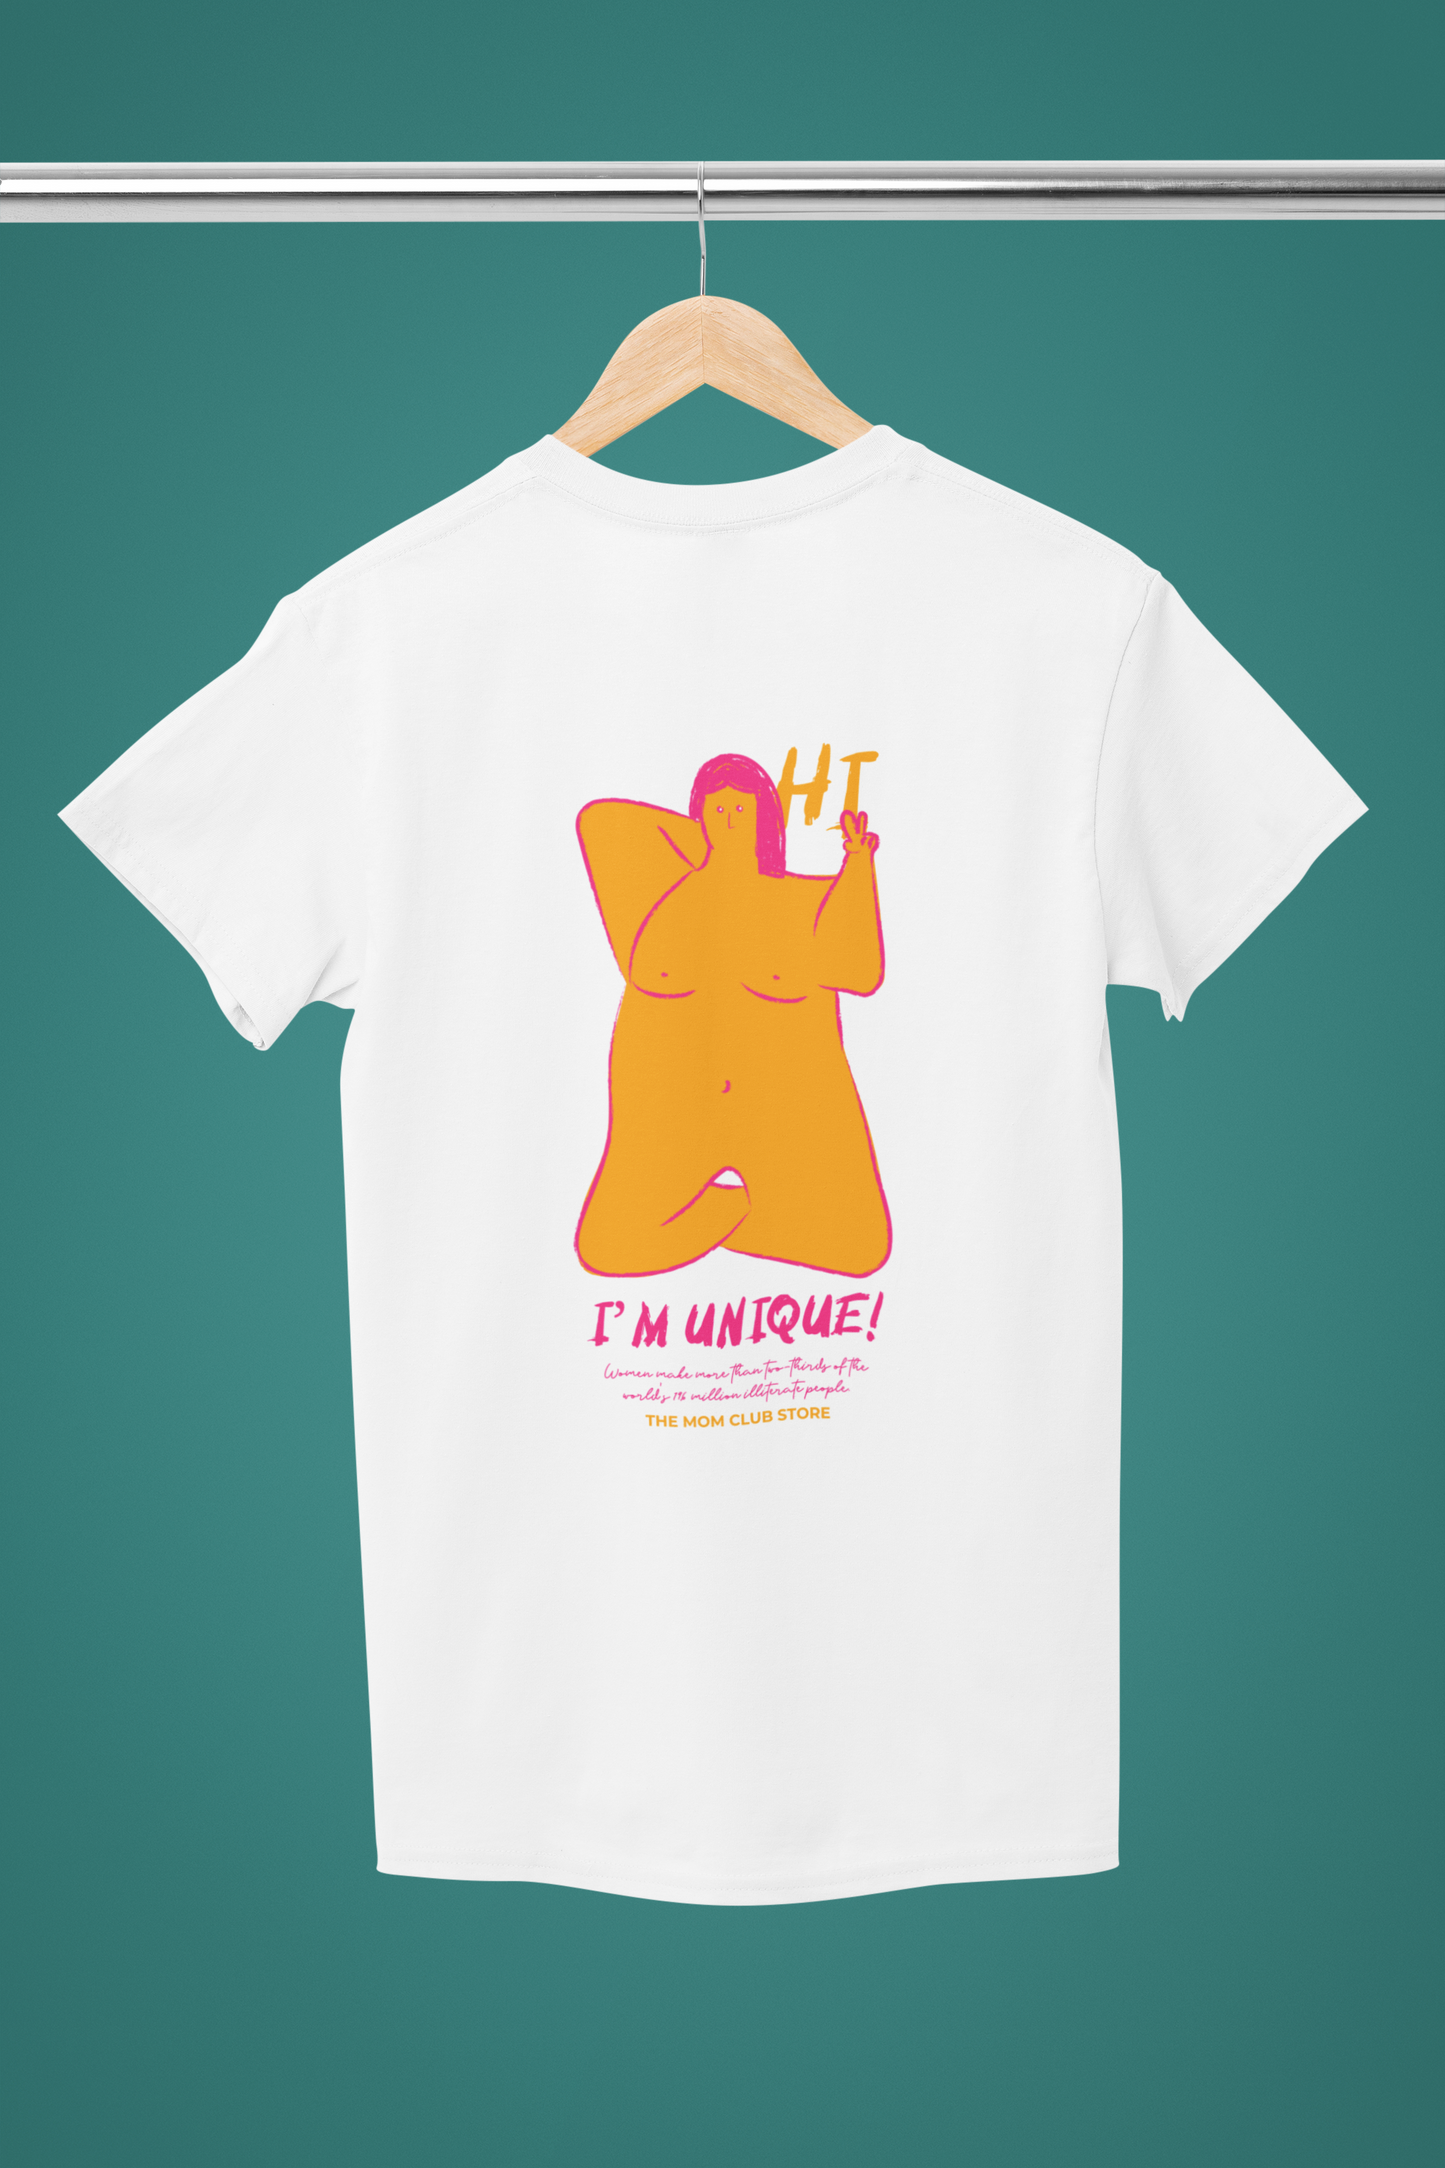 HI I'M UNIQUE Unisex Short-Sleeve Graphic T-Shirt for Adults